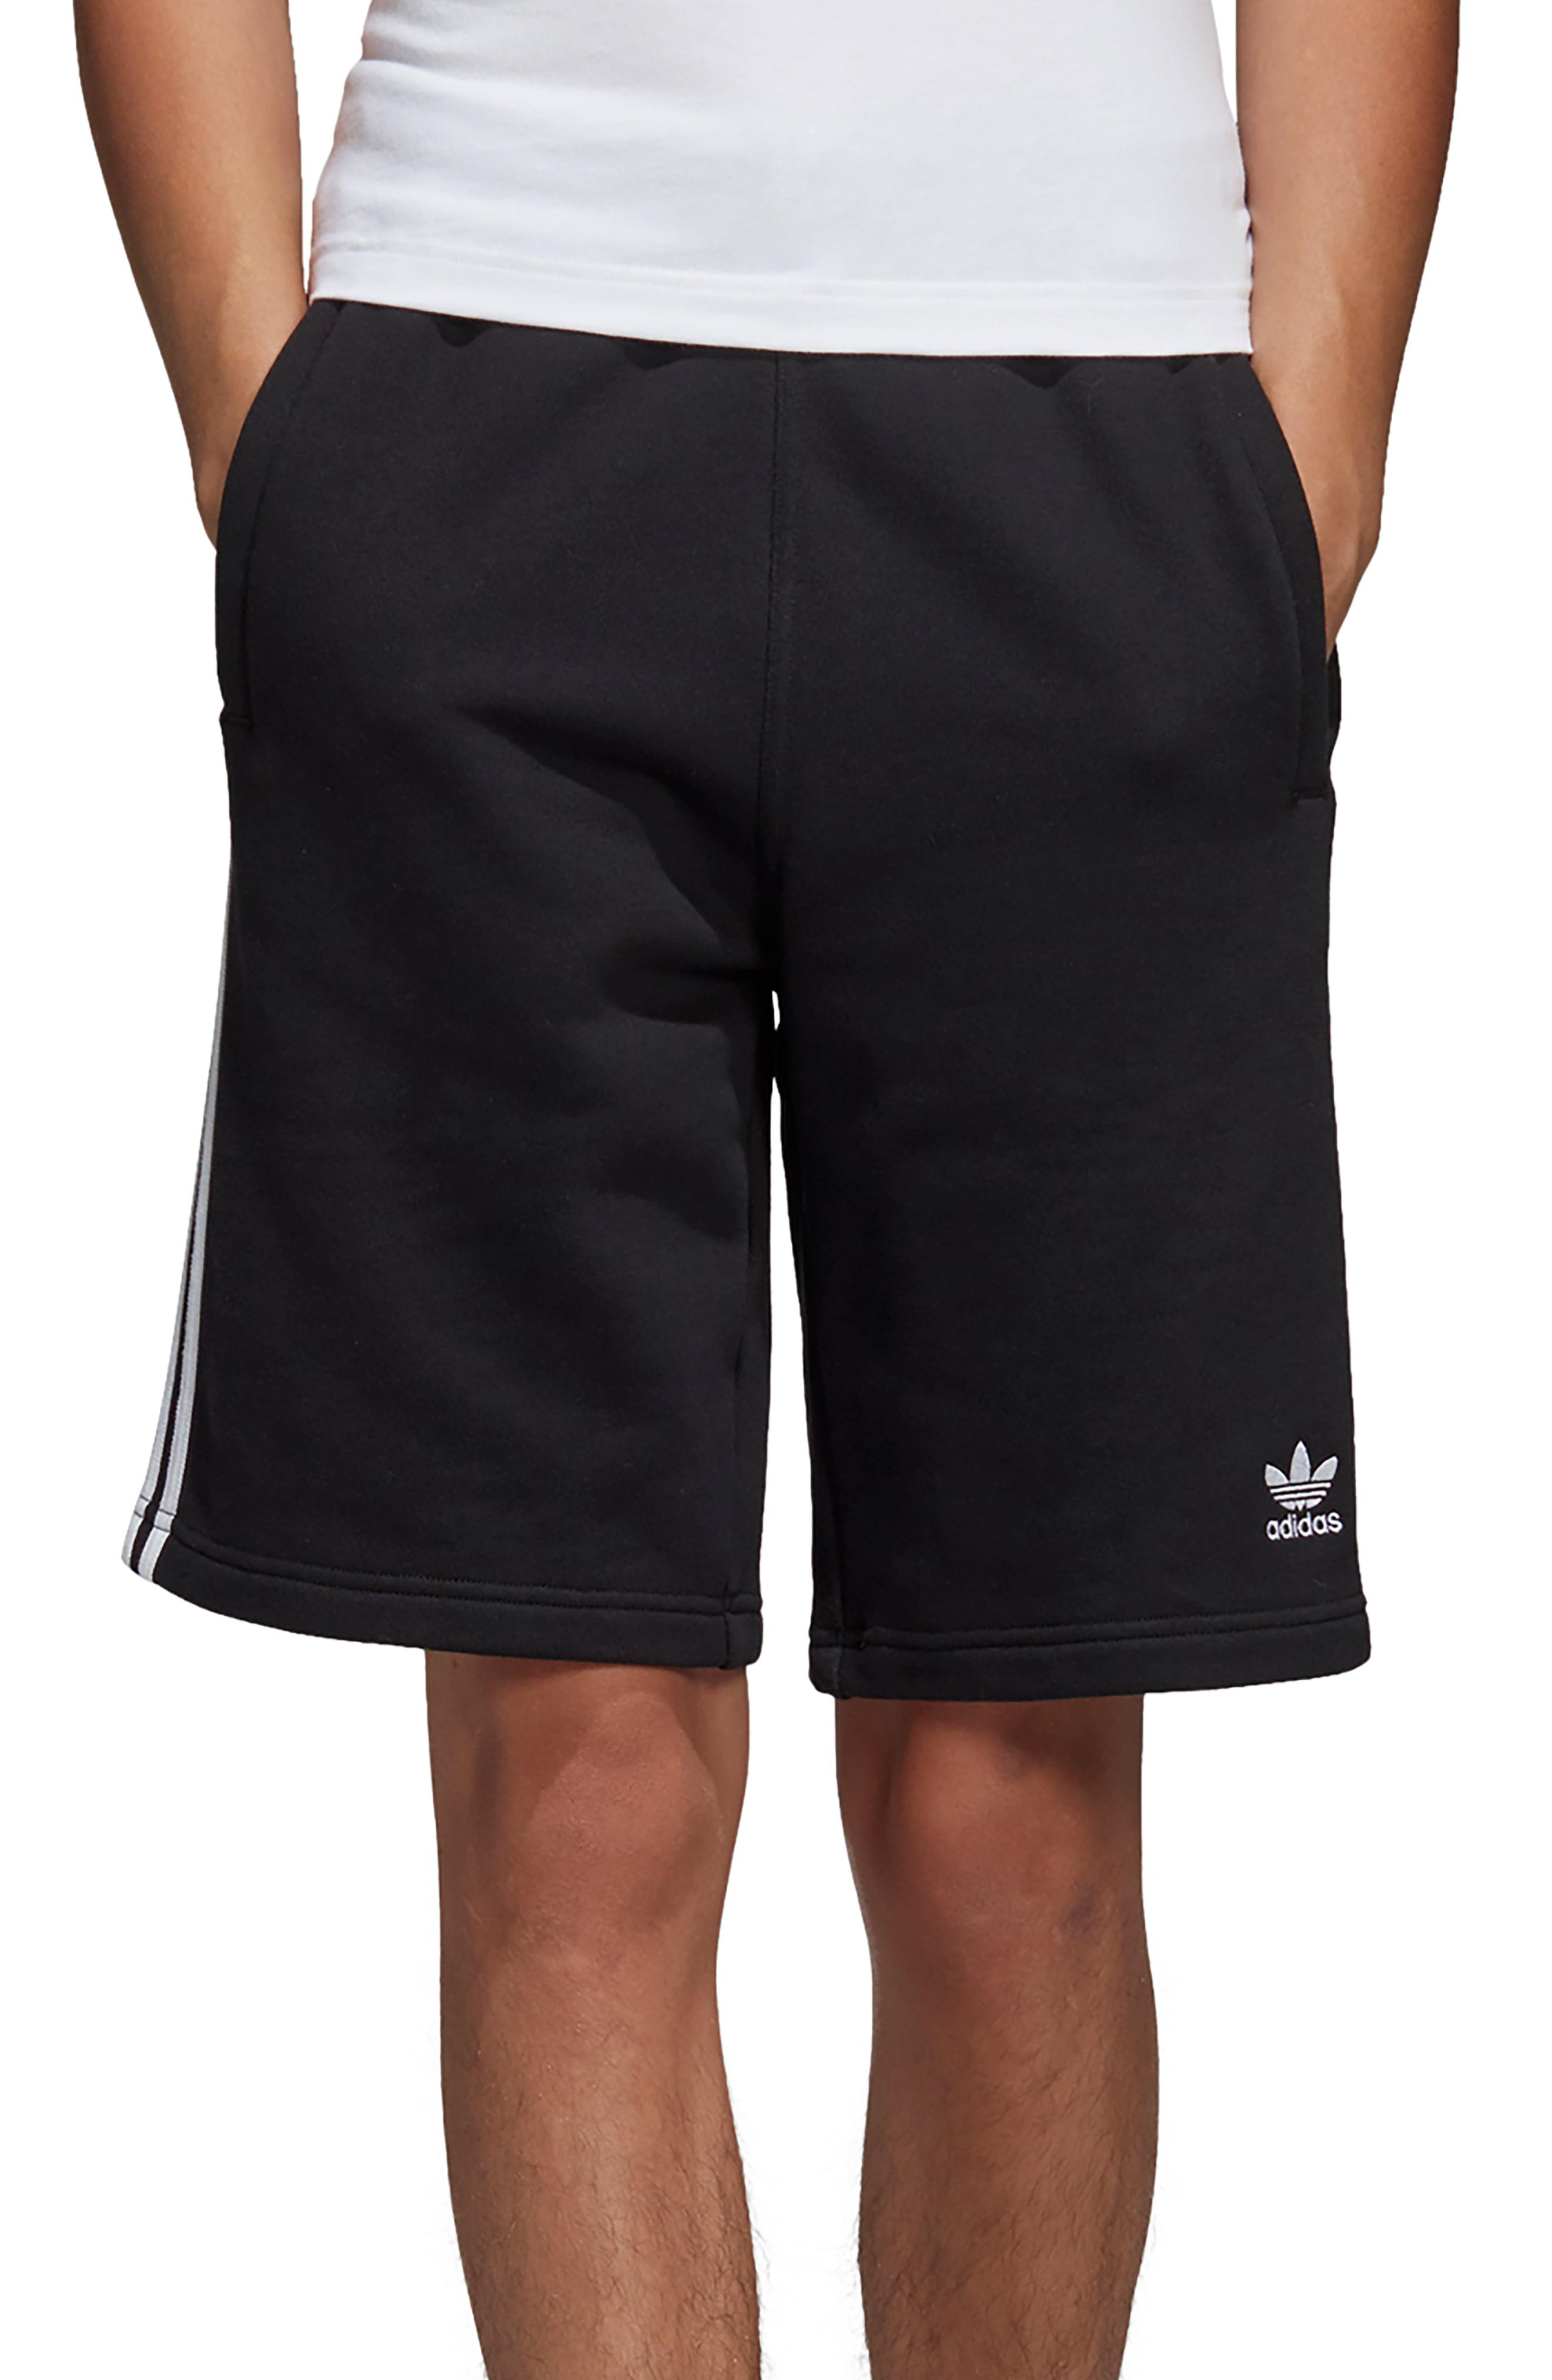 Lyst - adidas Originals 3-stripes Athletic Shorts in Black for Men